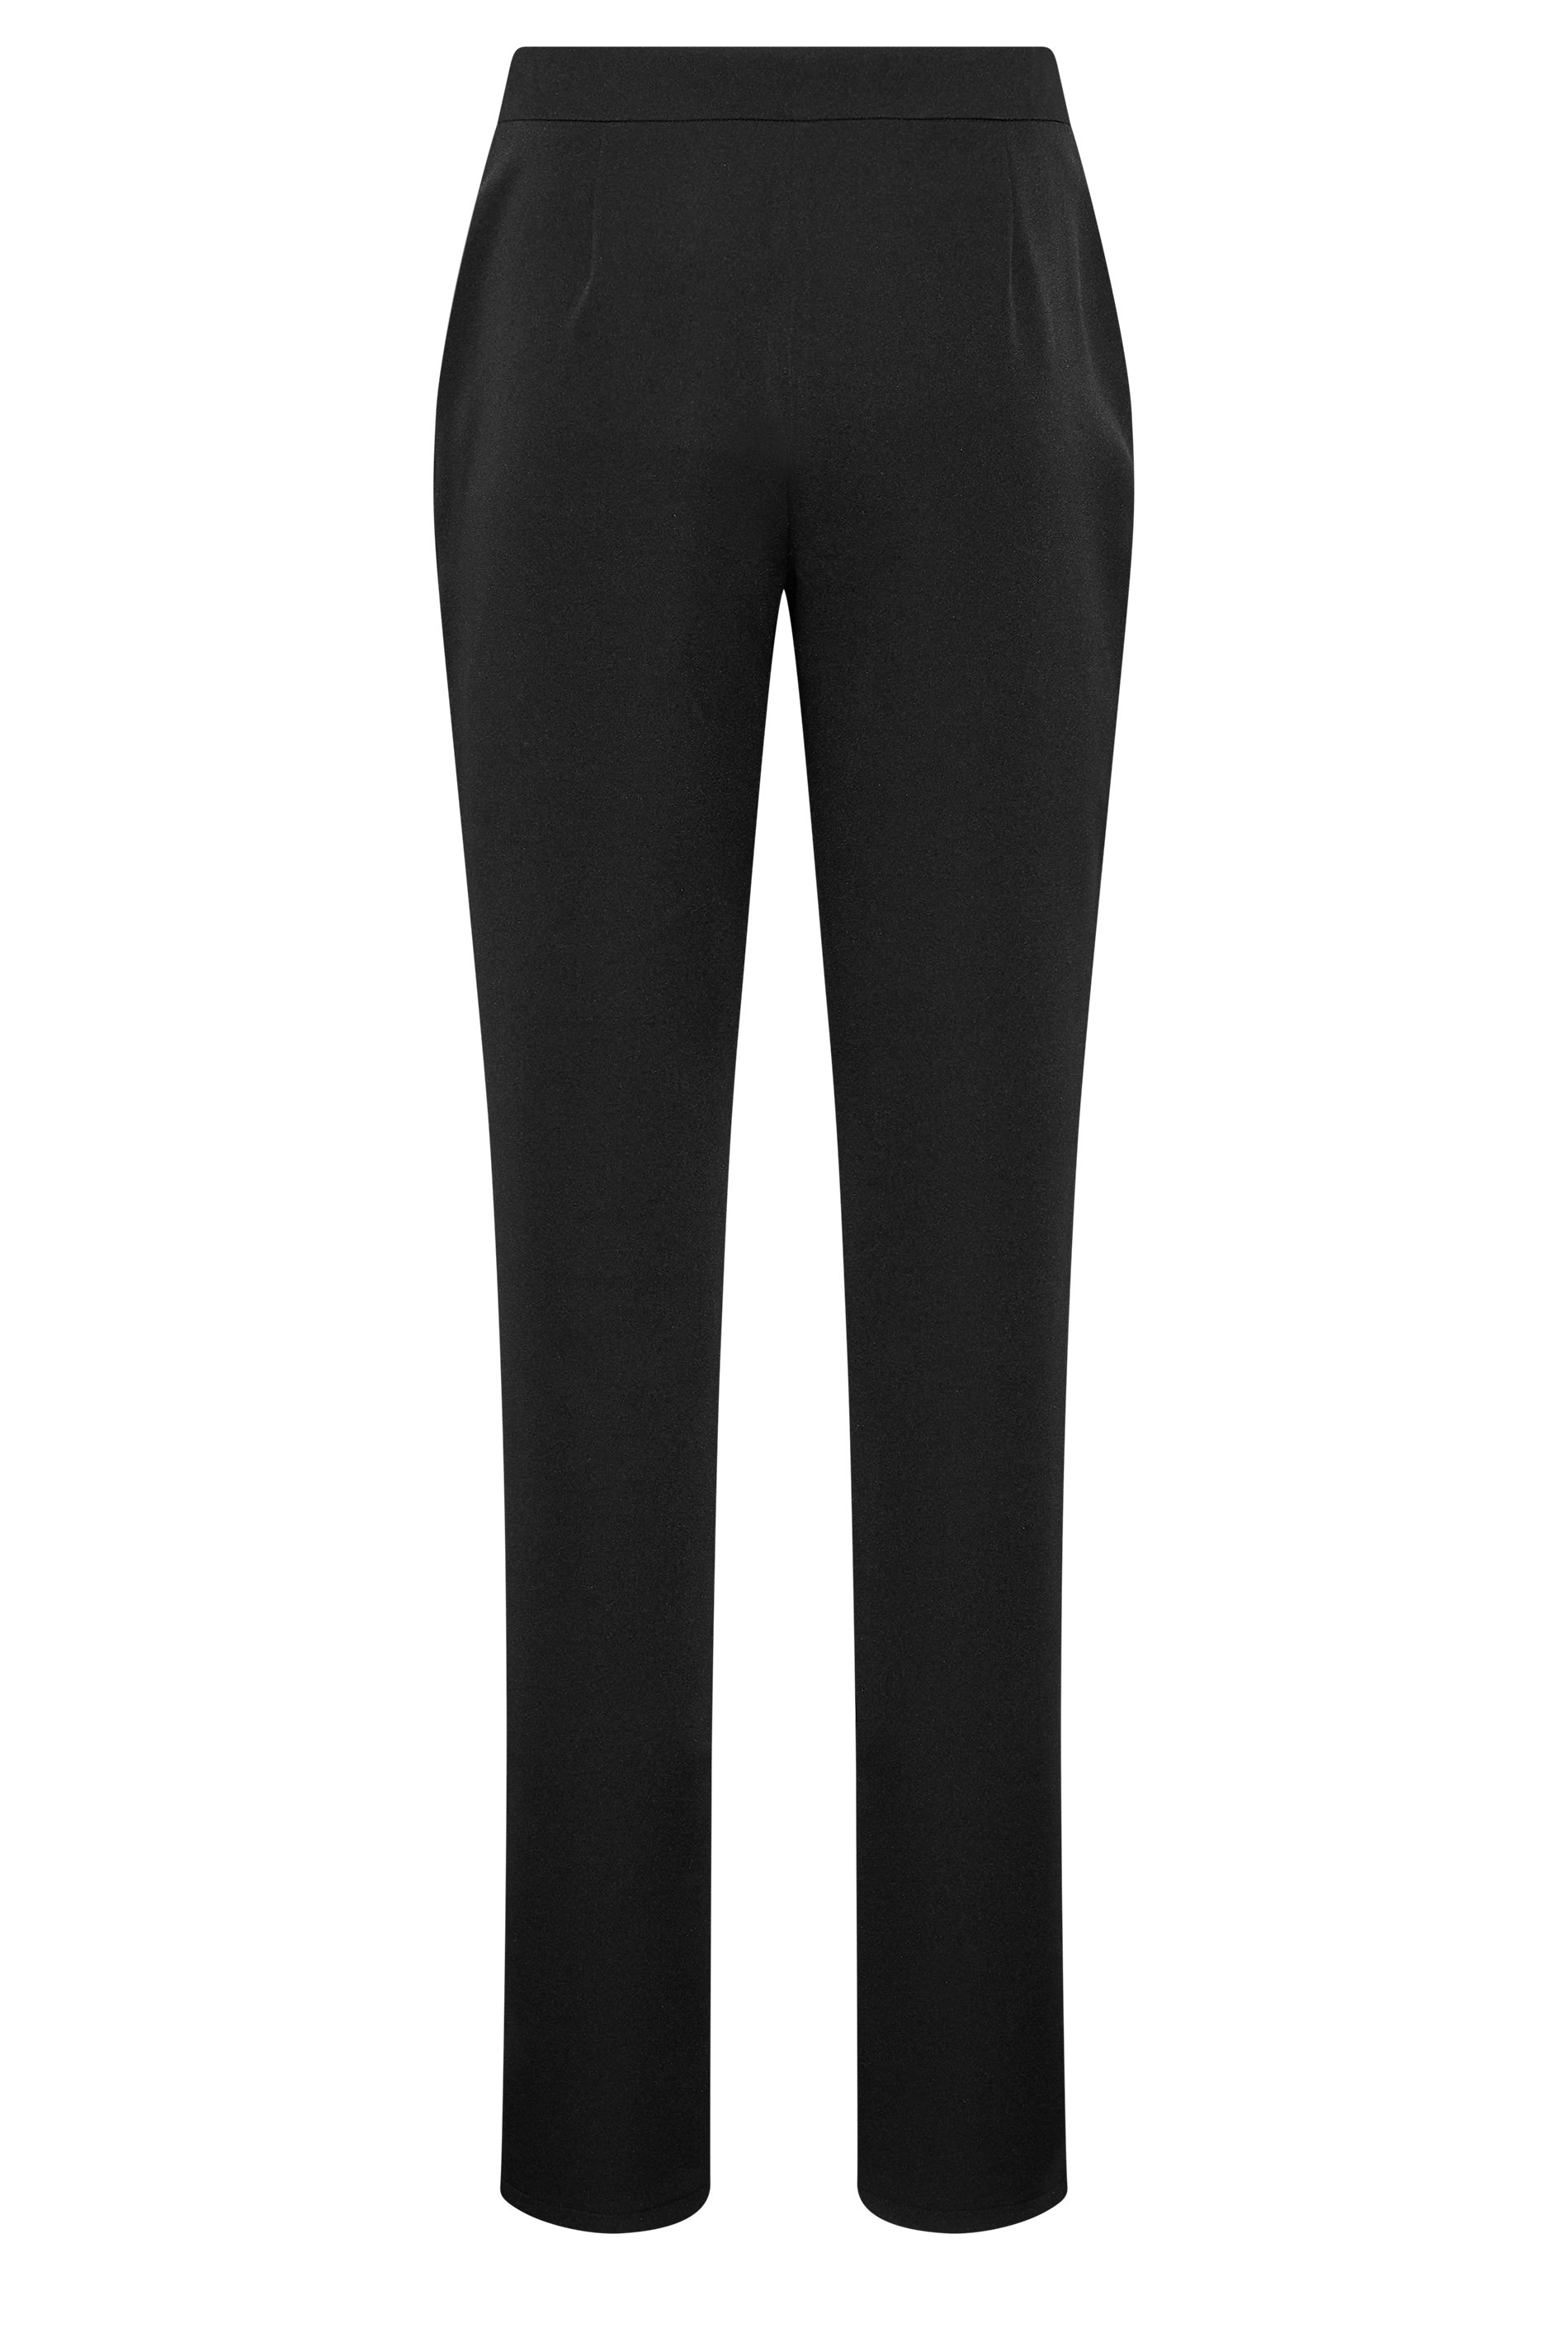 LTS Tall Women's Black Split Hem Wide Leg Trousers | Long Tall Sally